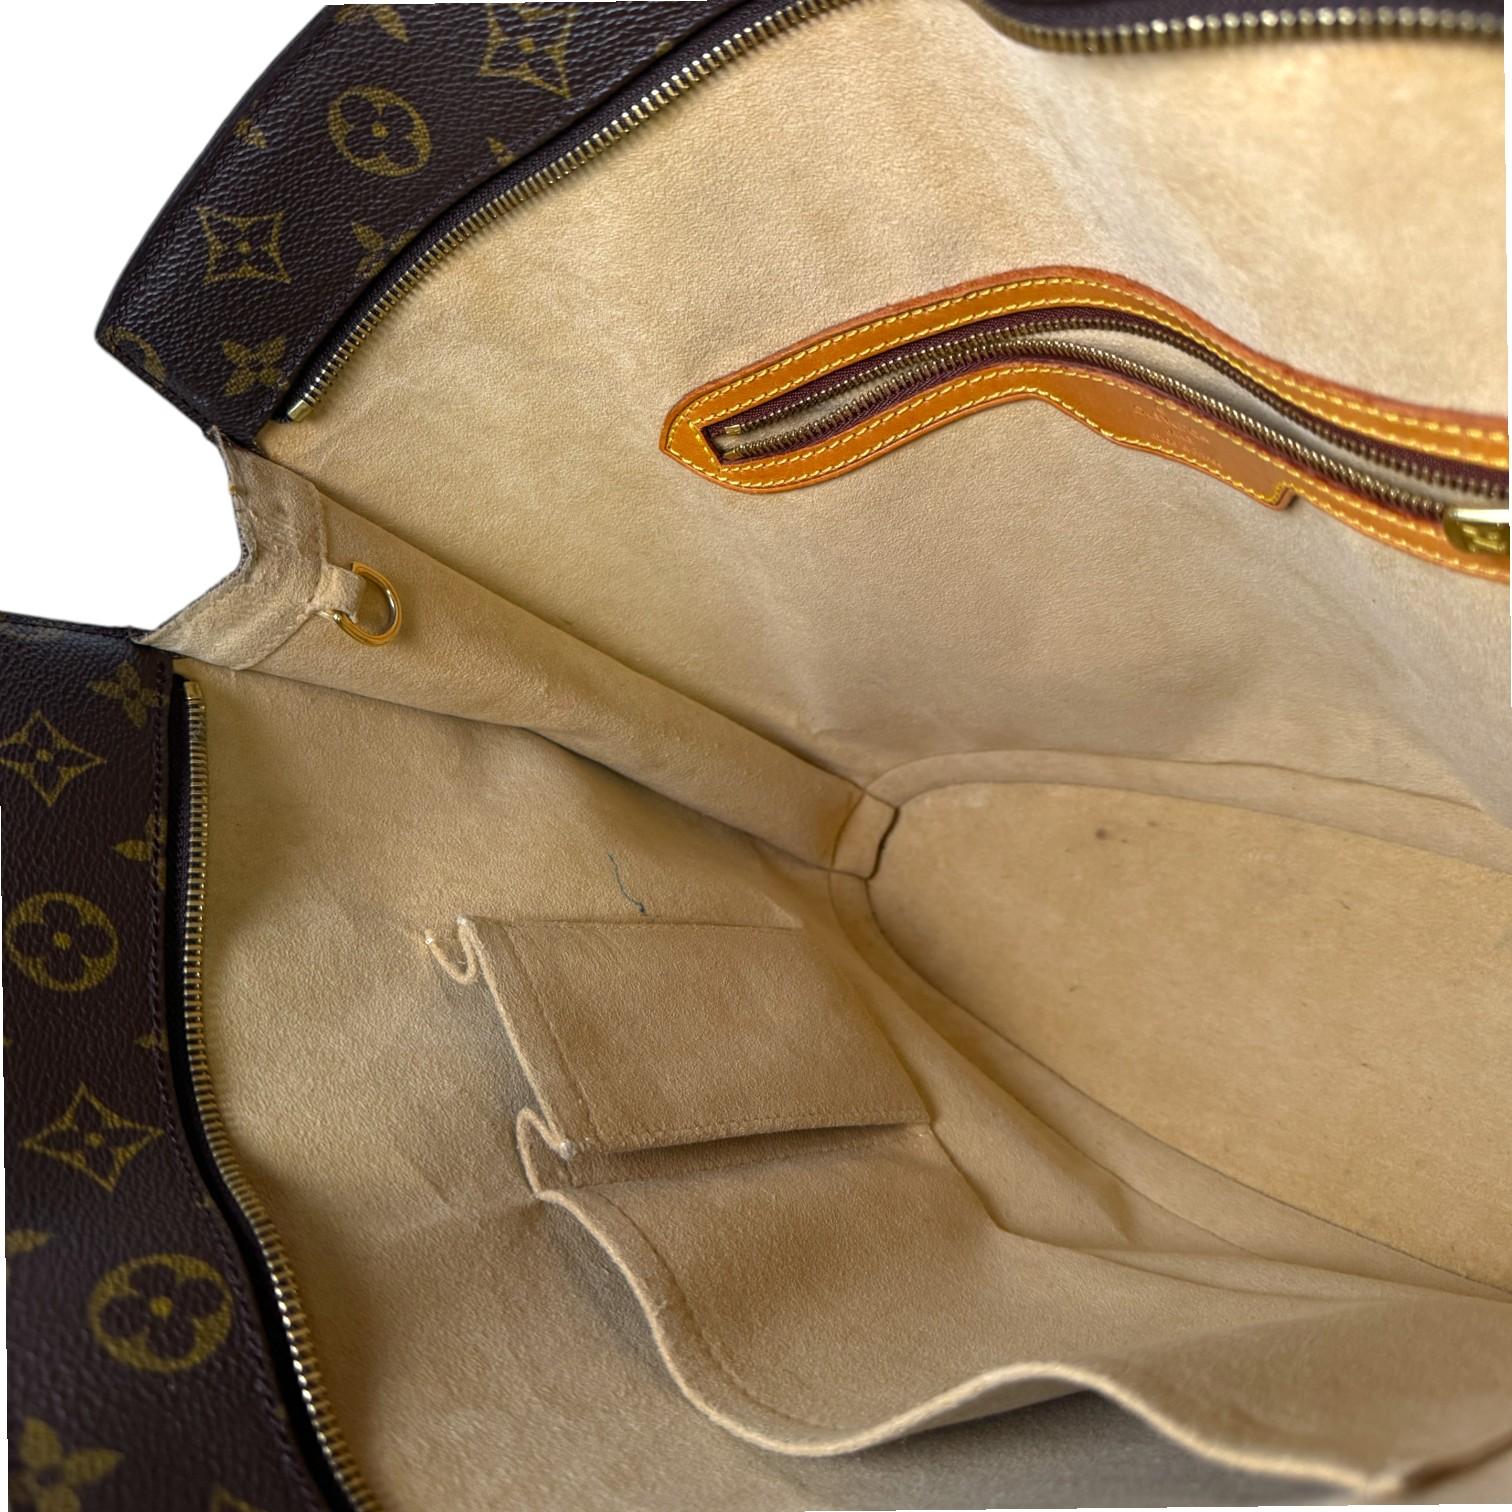 Authentic estate Louis Vuitton Monogram Babylone shoulder bag